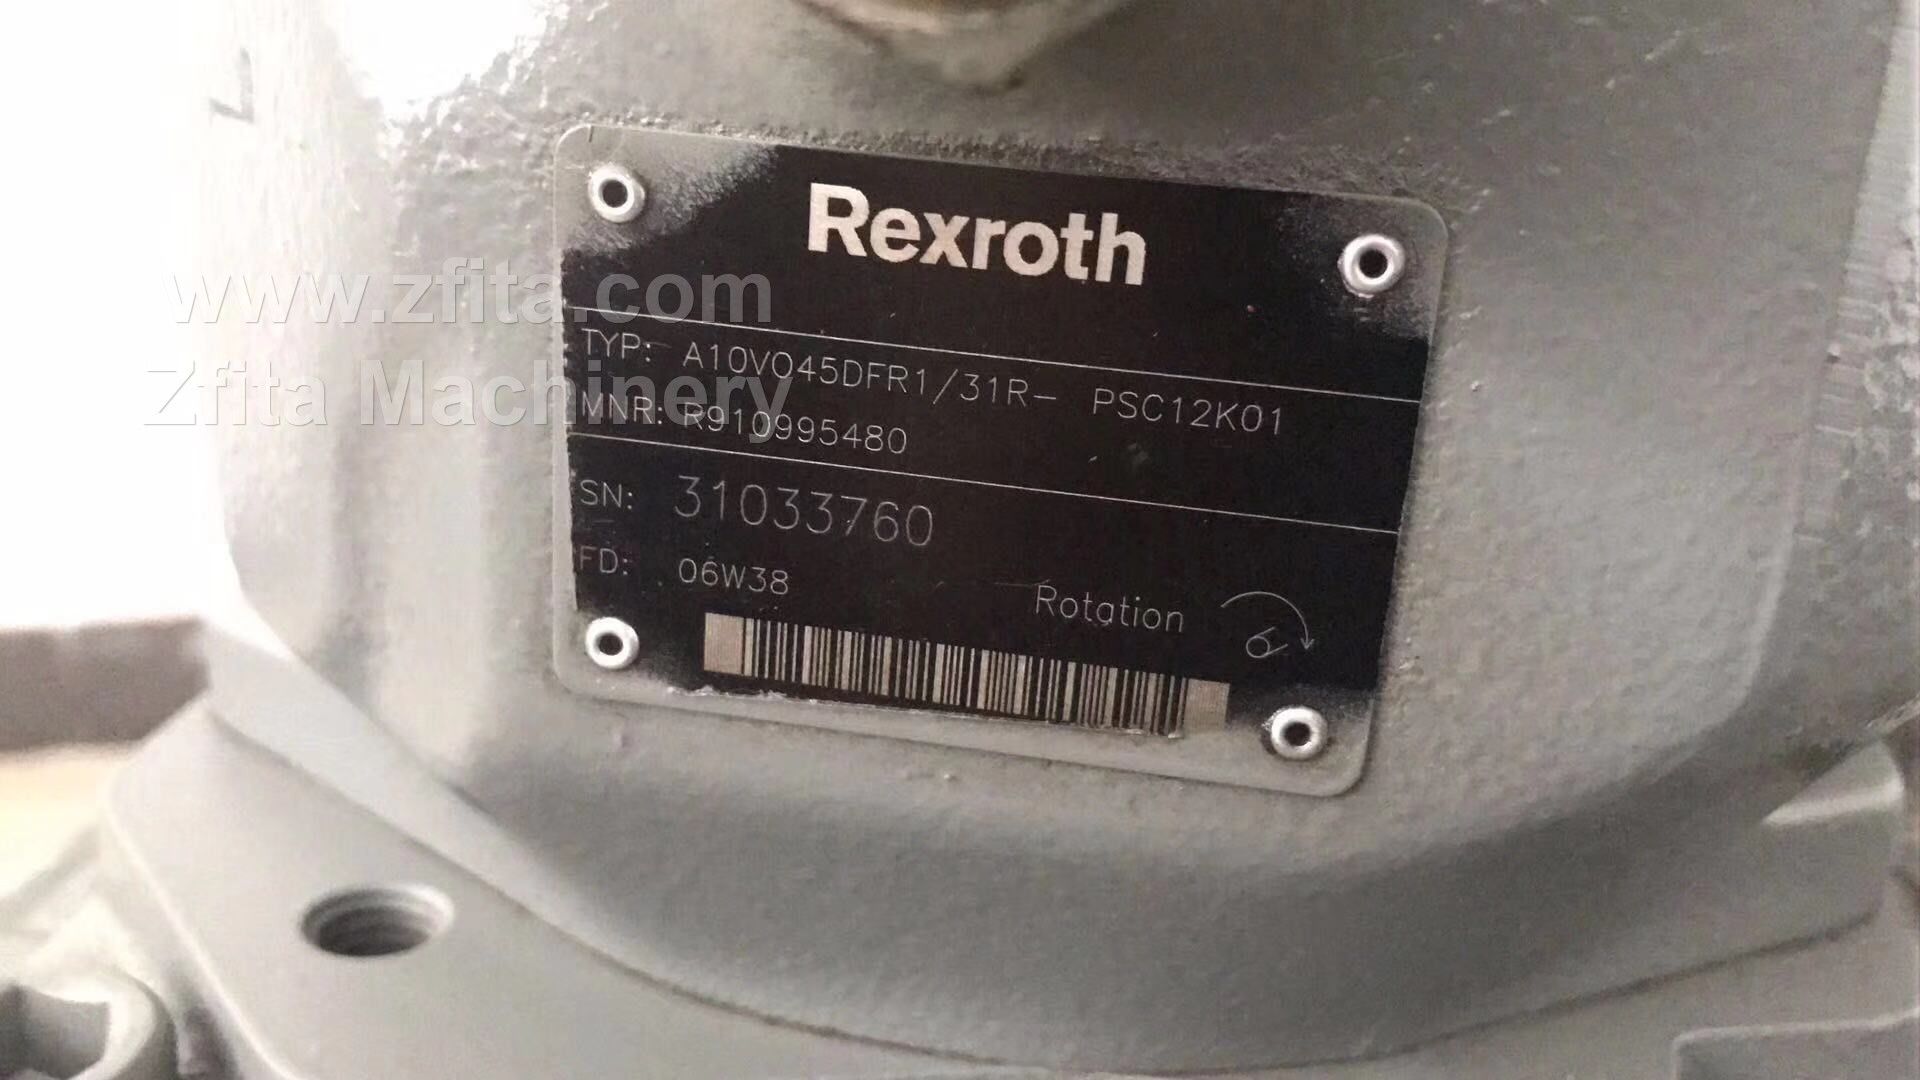 Rexroth A10V045DFR1